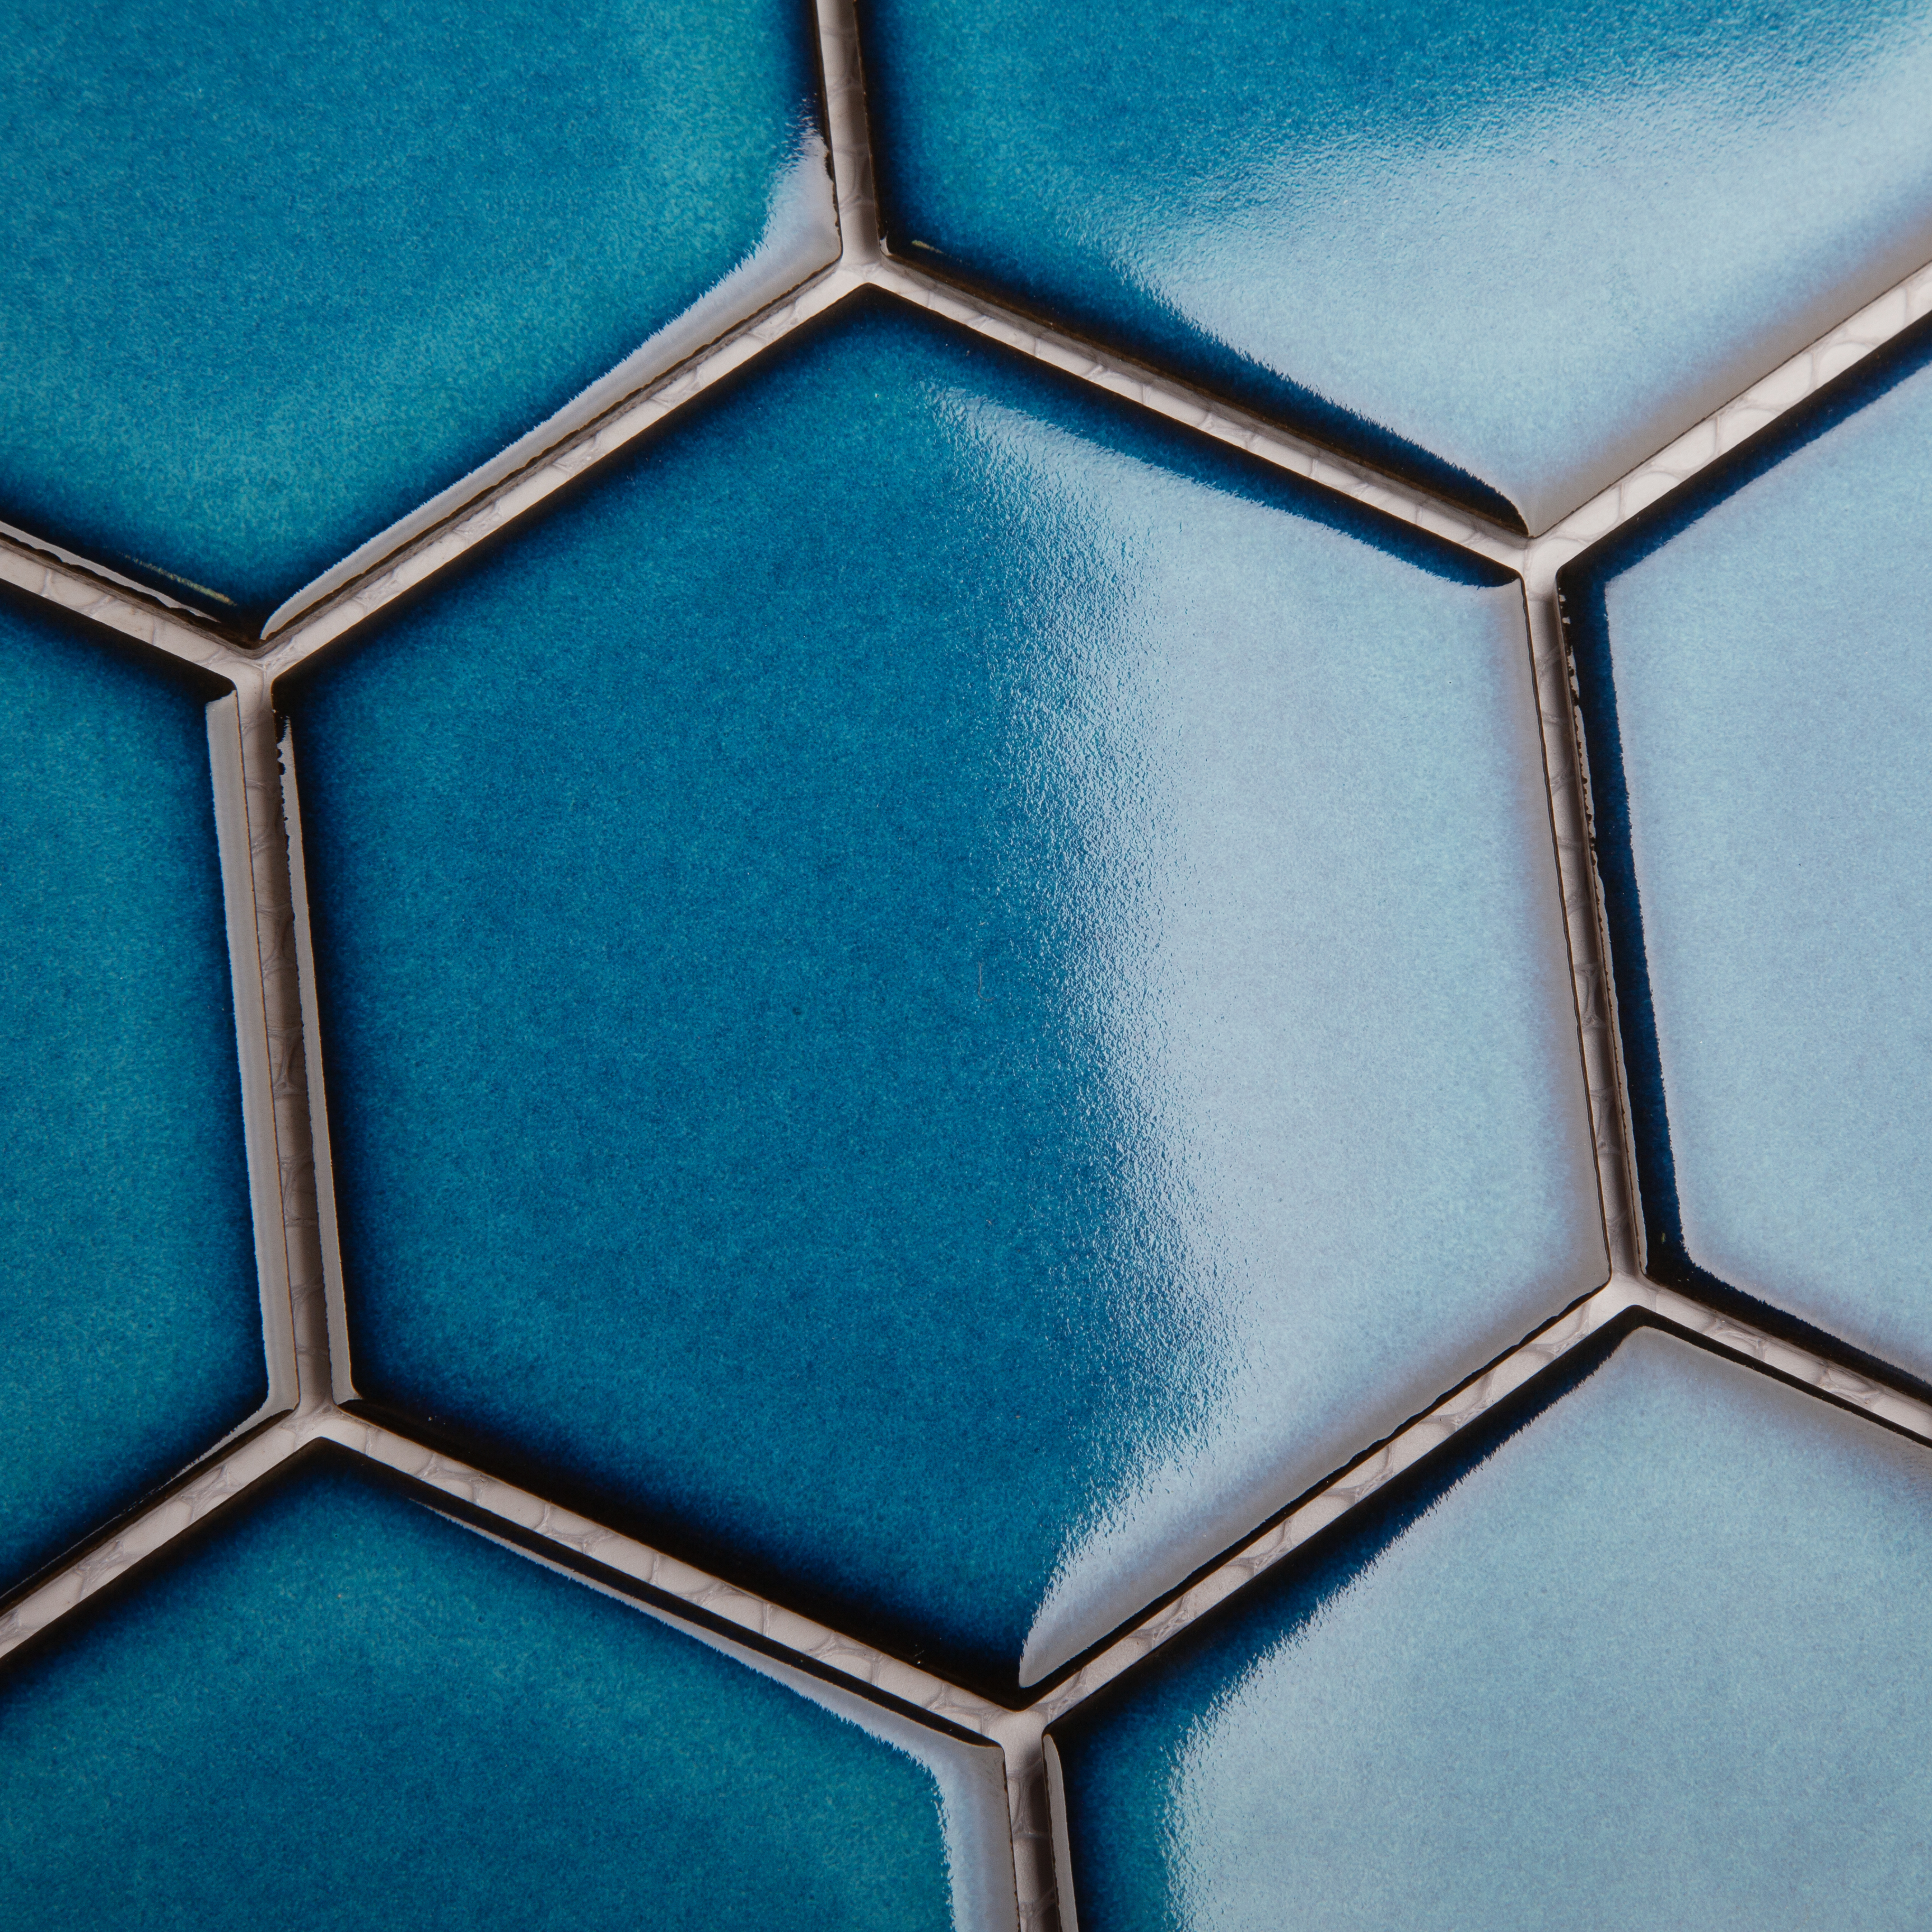 Мозаика Hexagon big Deep Blue Glossy (JJFQ80048) серия Homework